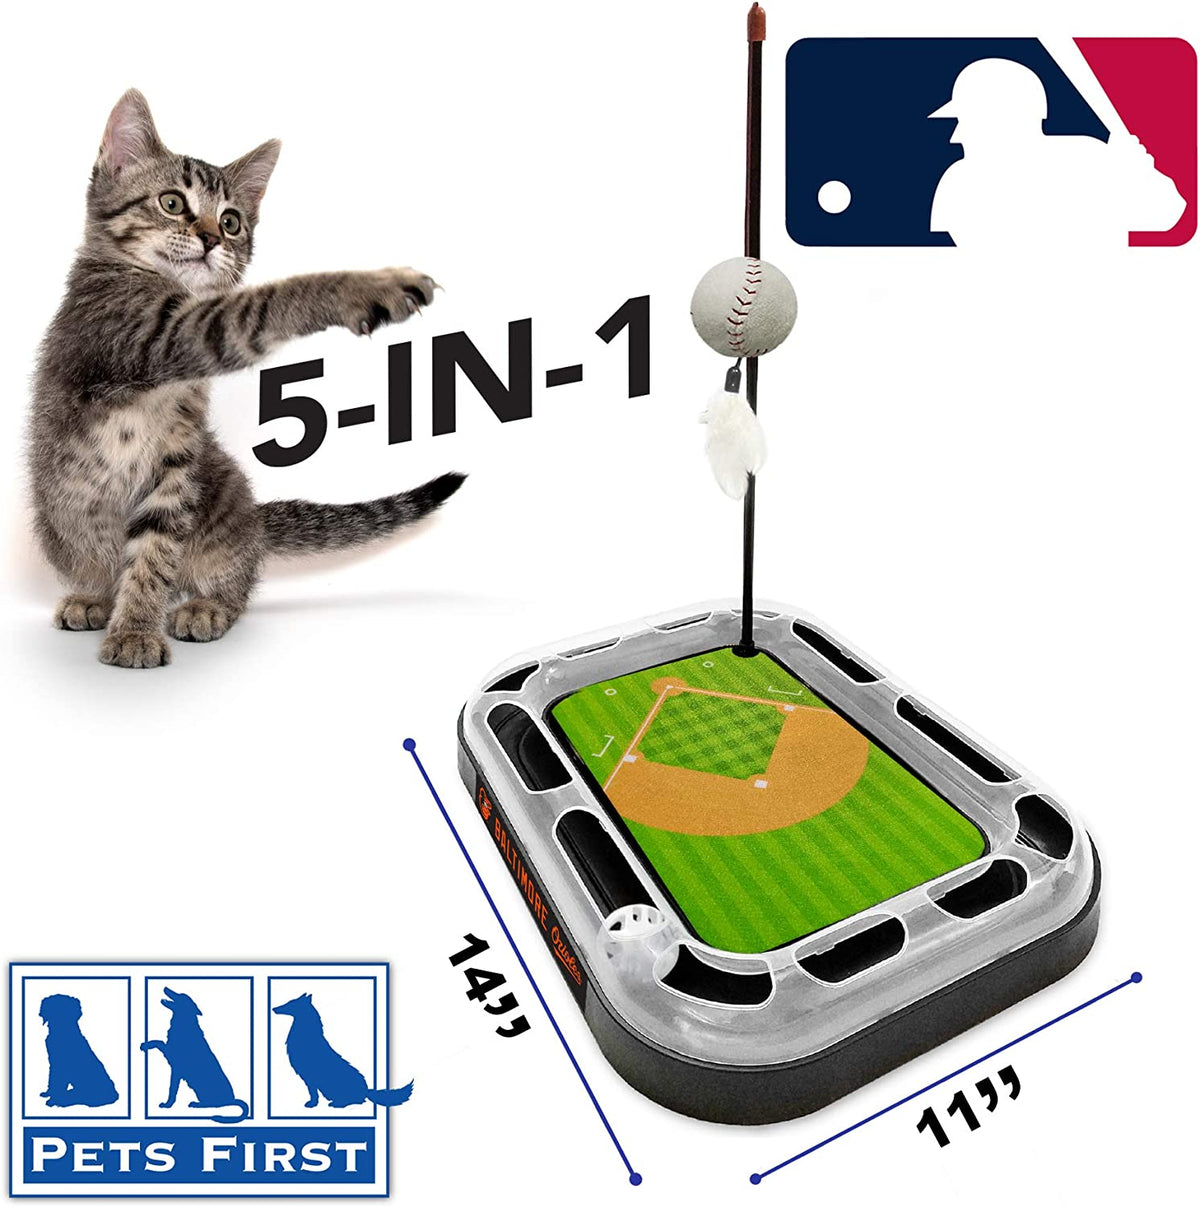 Baltimore Orioles Baseball Cat Scratcher Toy